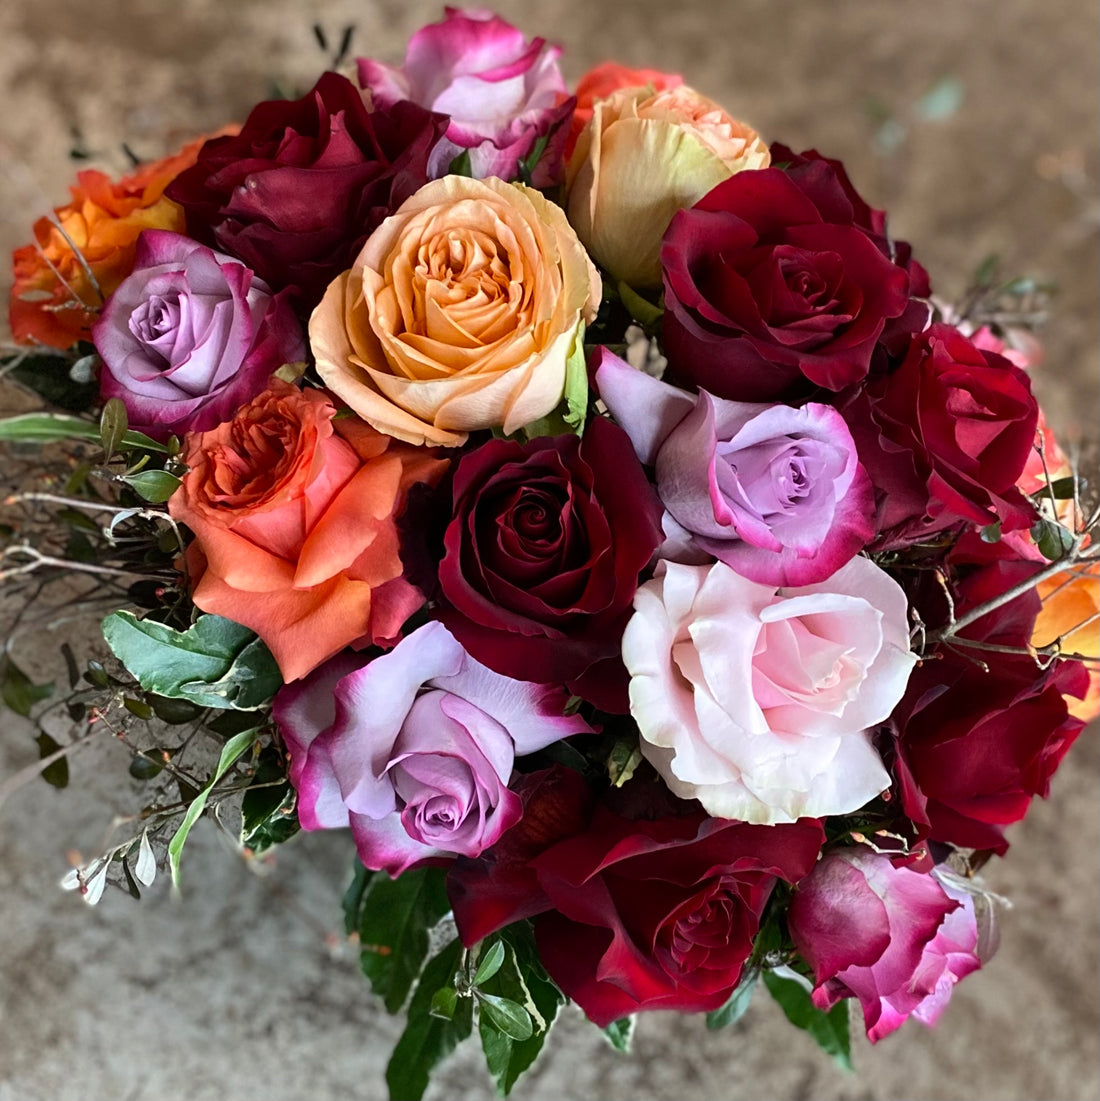 A Rose Arrangement - Assorted Colours Arranged in a Vase (6782848532561)